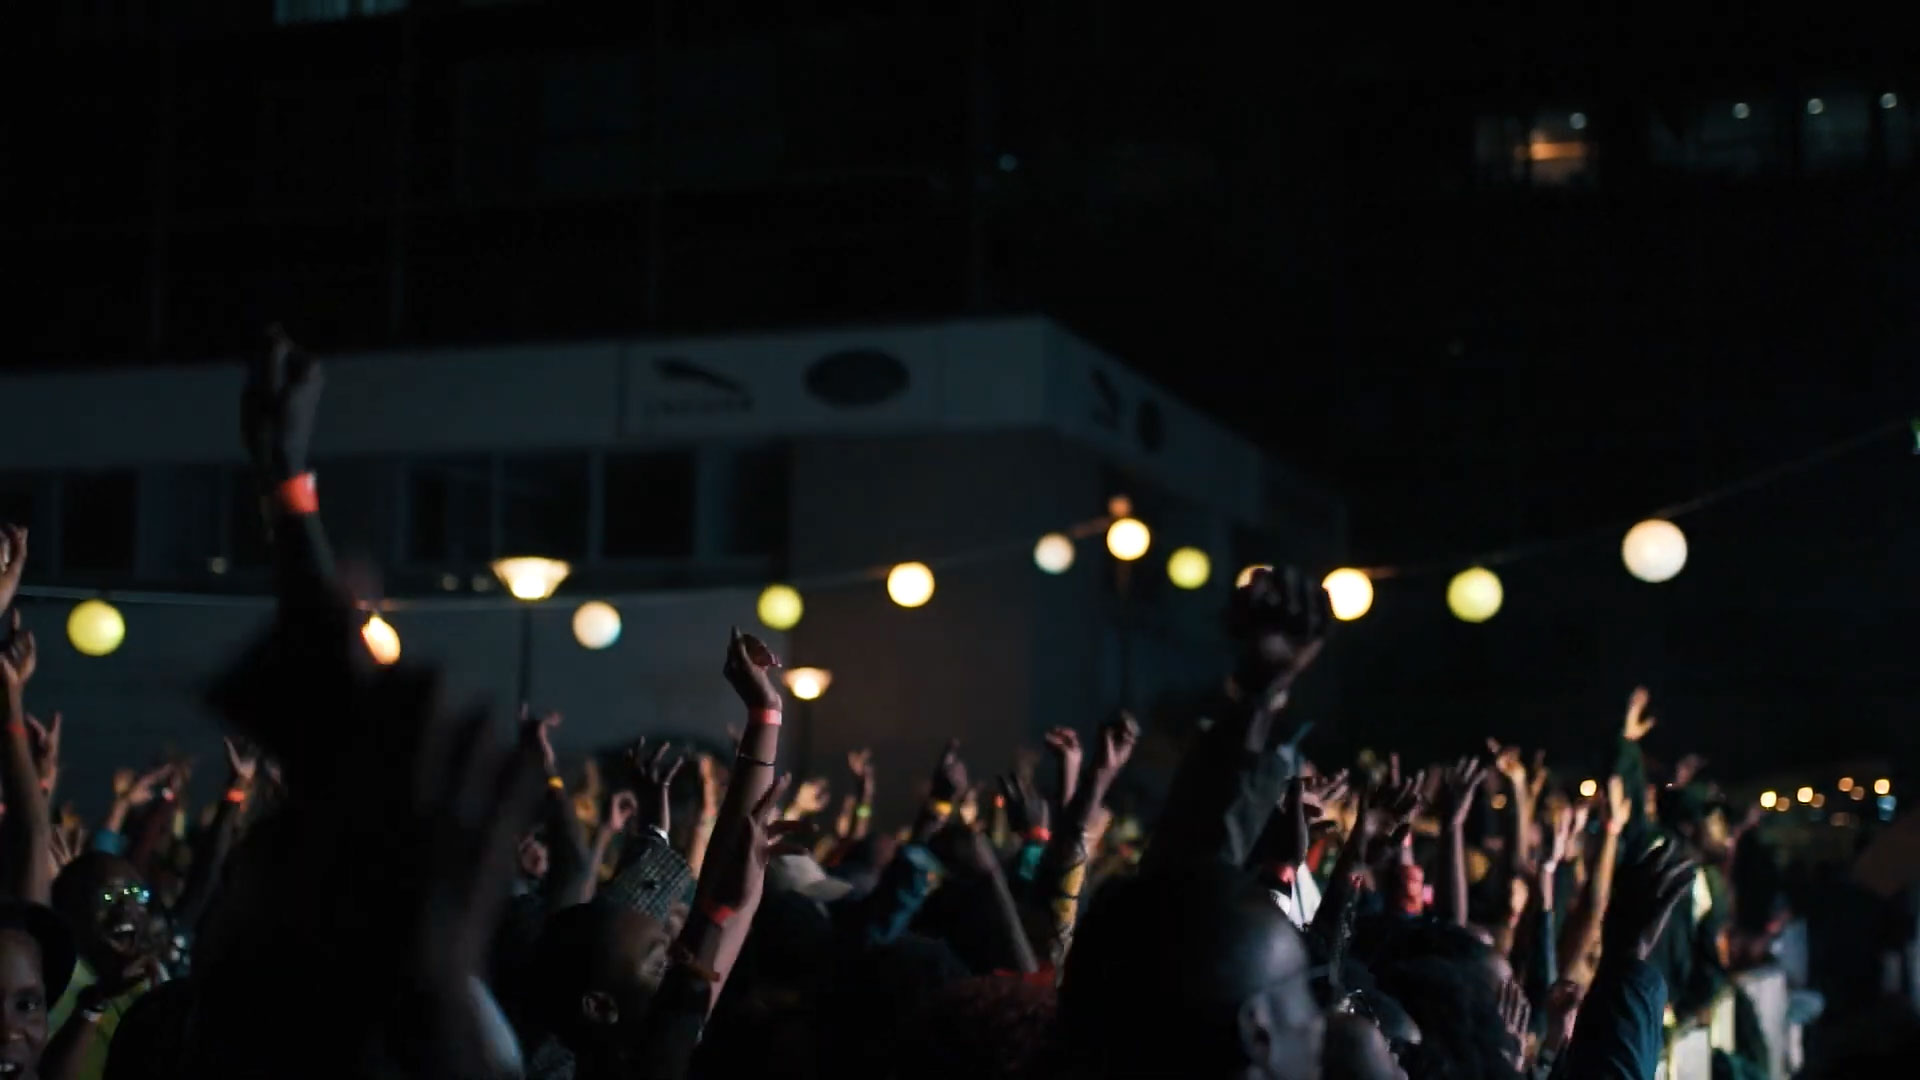 A crowd photo taken at a music event in Nairobi, Kenya